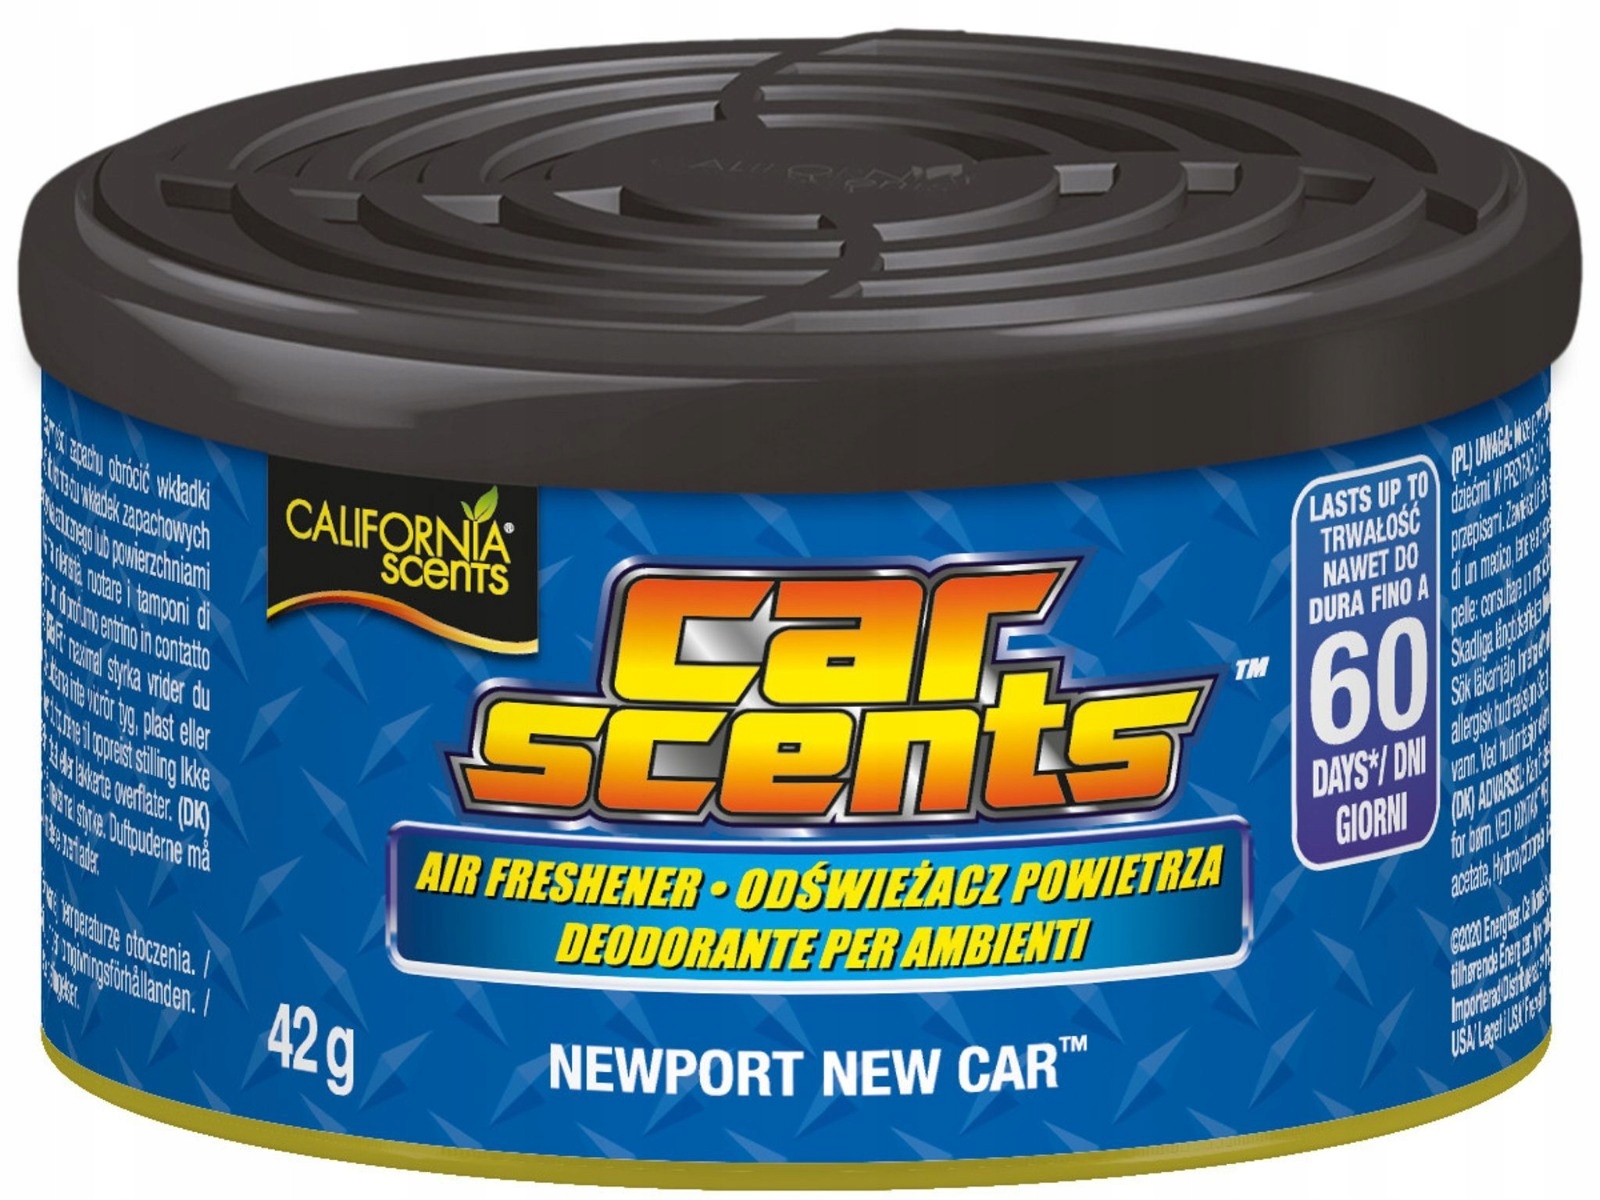 

California Car Scents Zapach Newport New Car